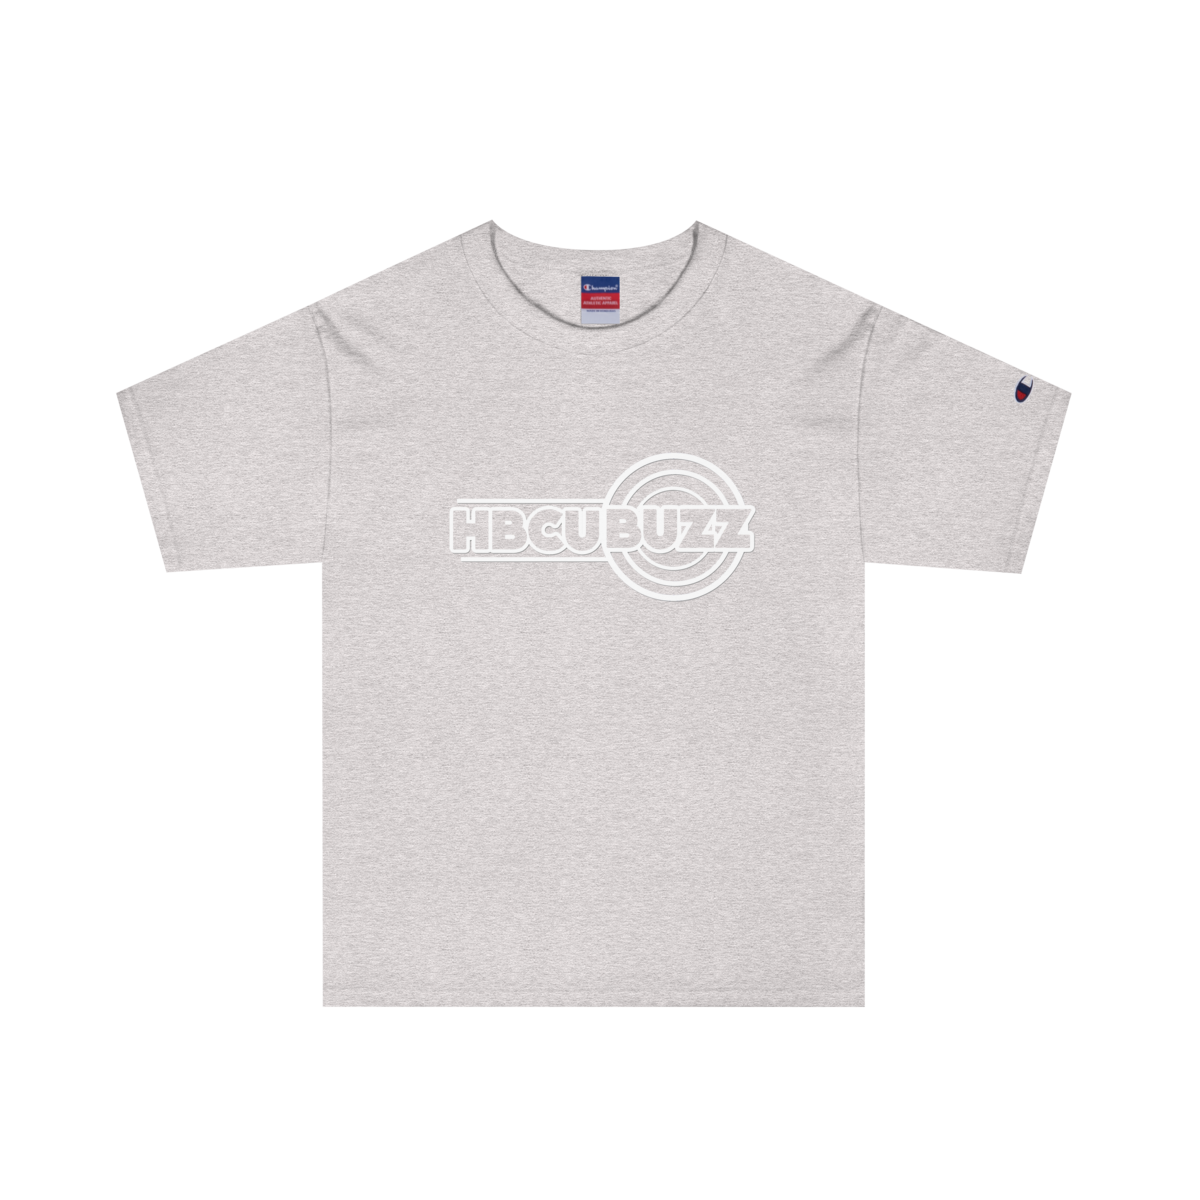 HBCU Buzz Champion T-Shirt - HBCU Buzz Shop